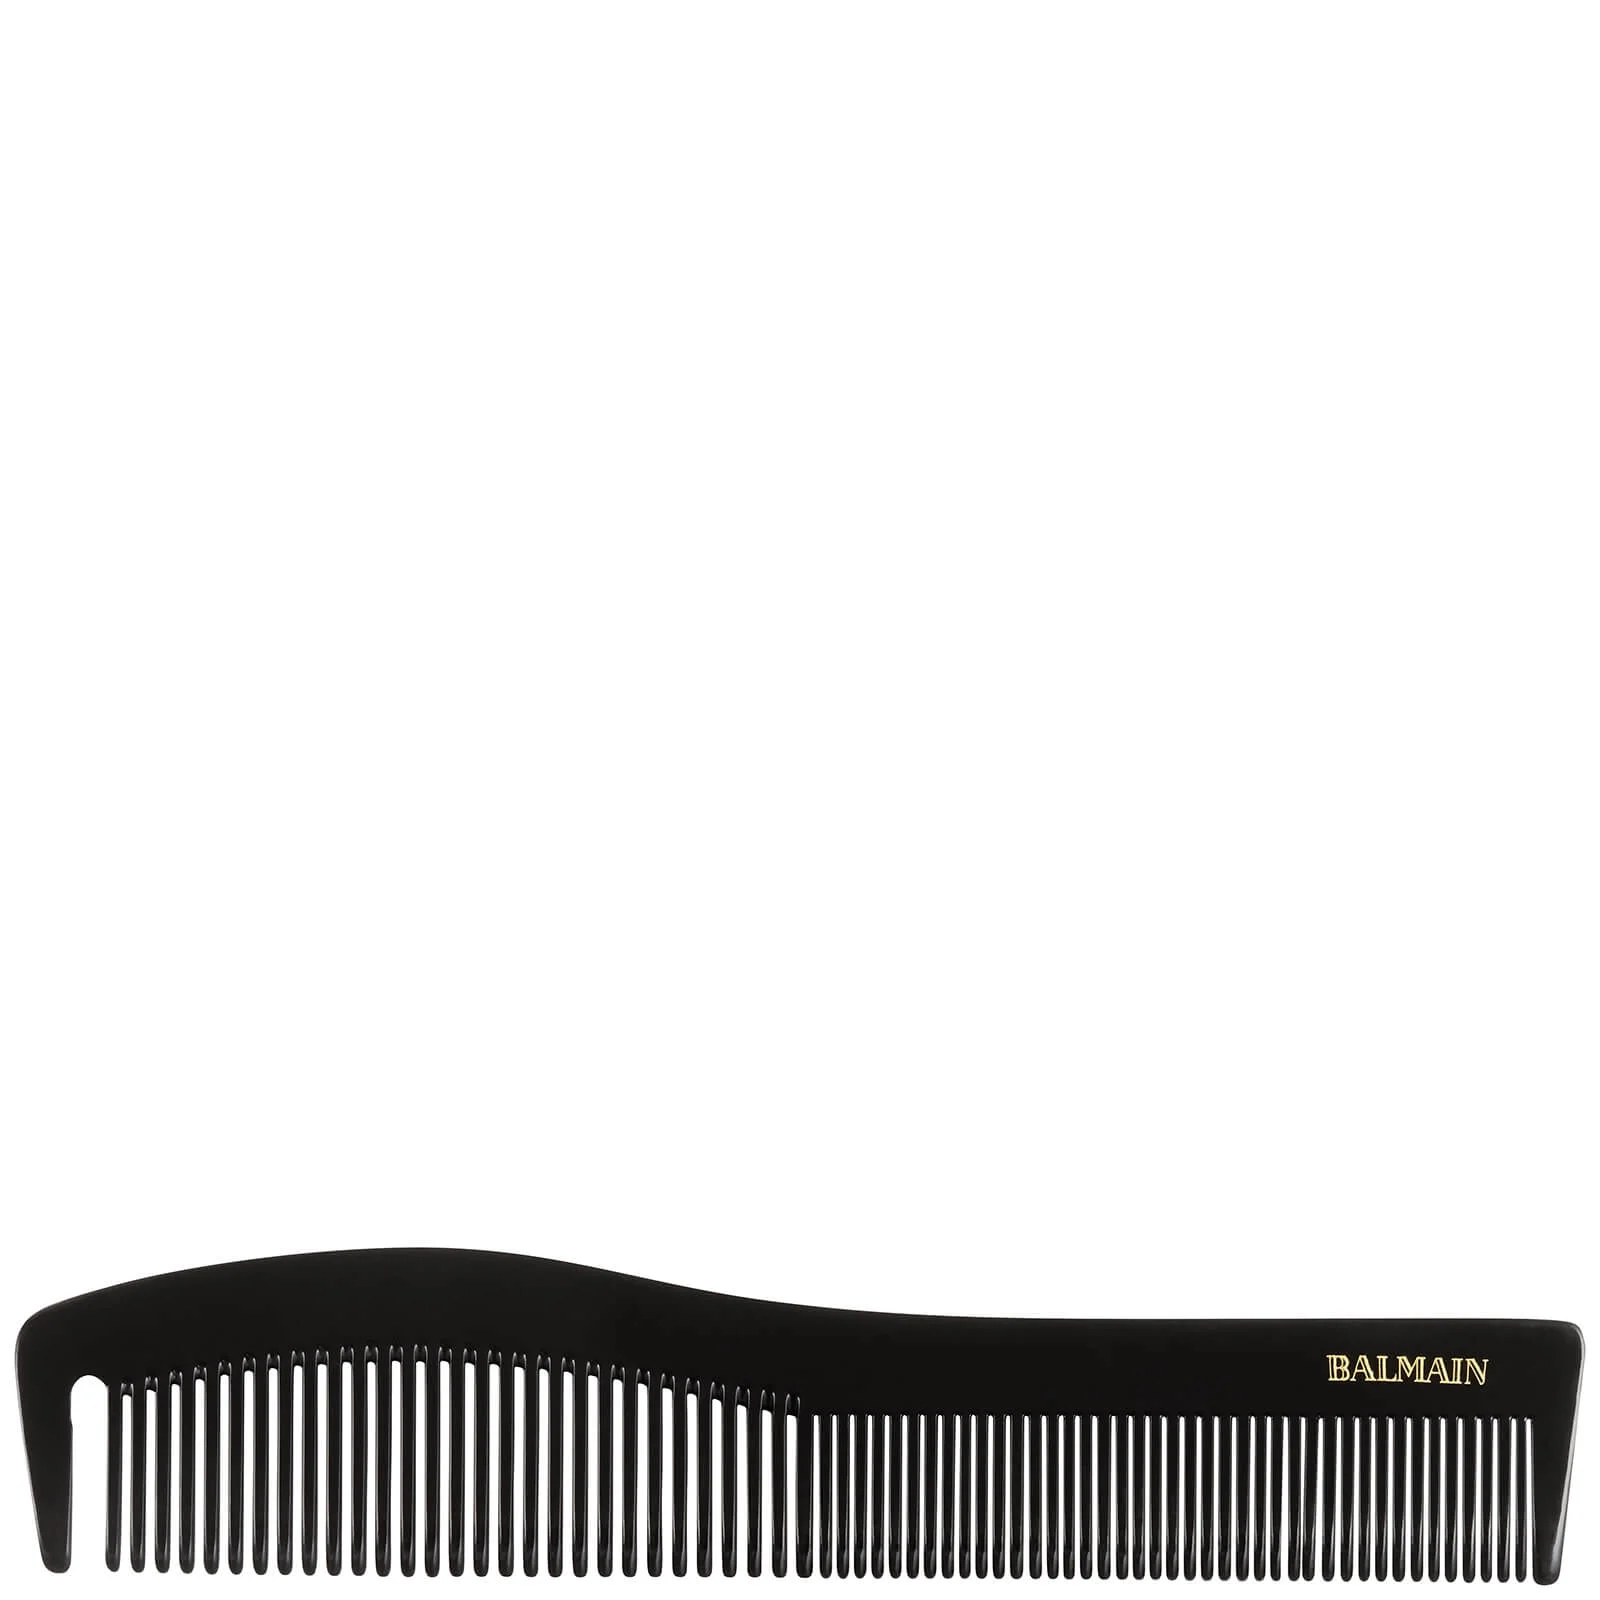 Balmain Cutting Comb - Black and White Image 1